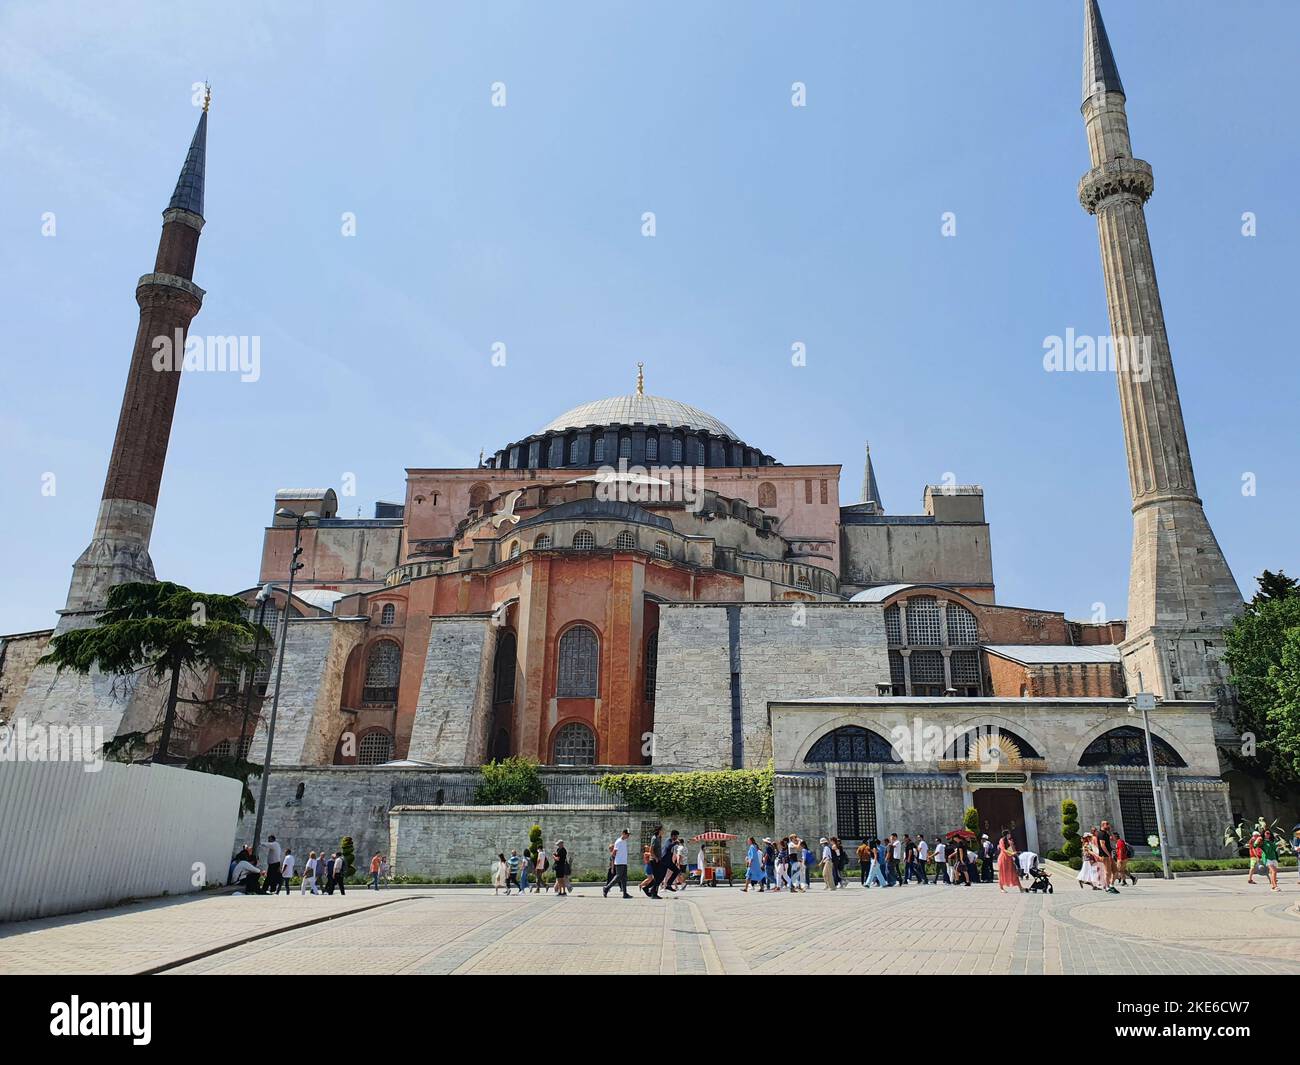 Die Hagia Sophia Moschee mit hohen Minaretten in Istanbul, Türkei Stockfoto